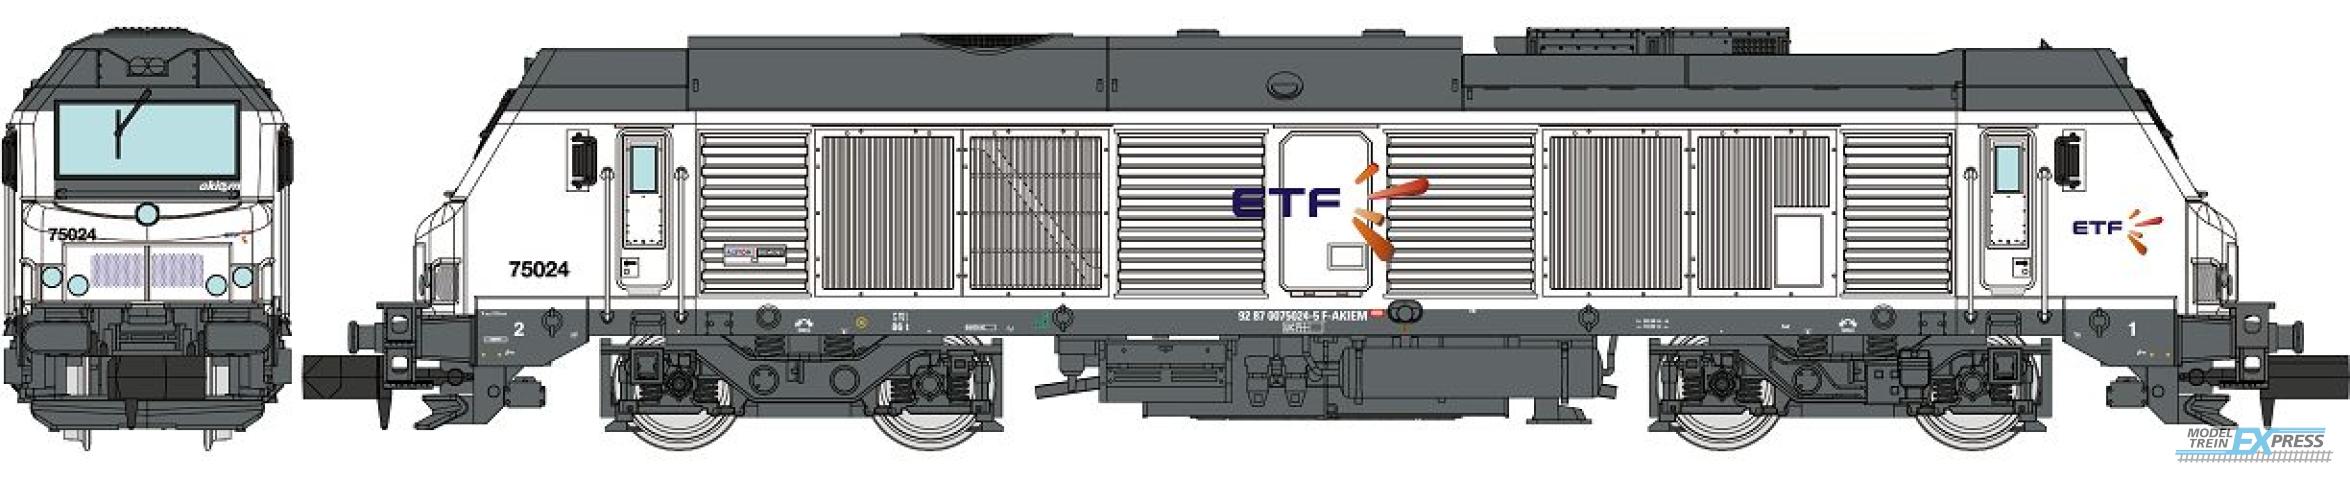 REE models NW-295 Diesel locomotive BB 75024 ETF white livery, Ep.VI